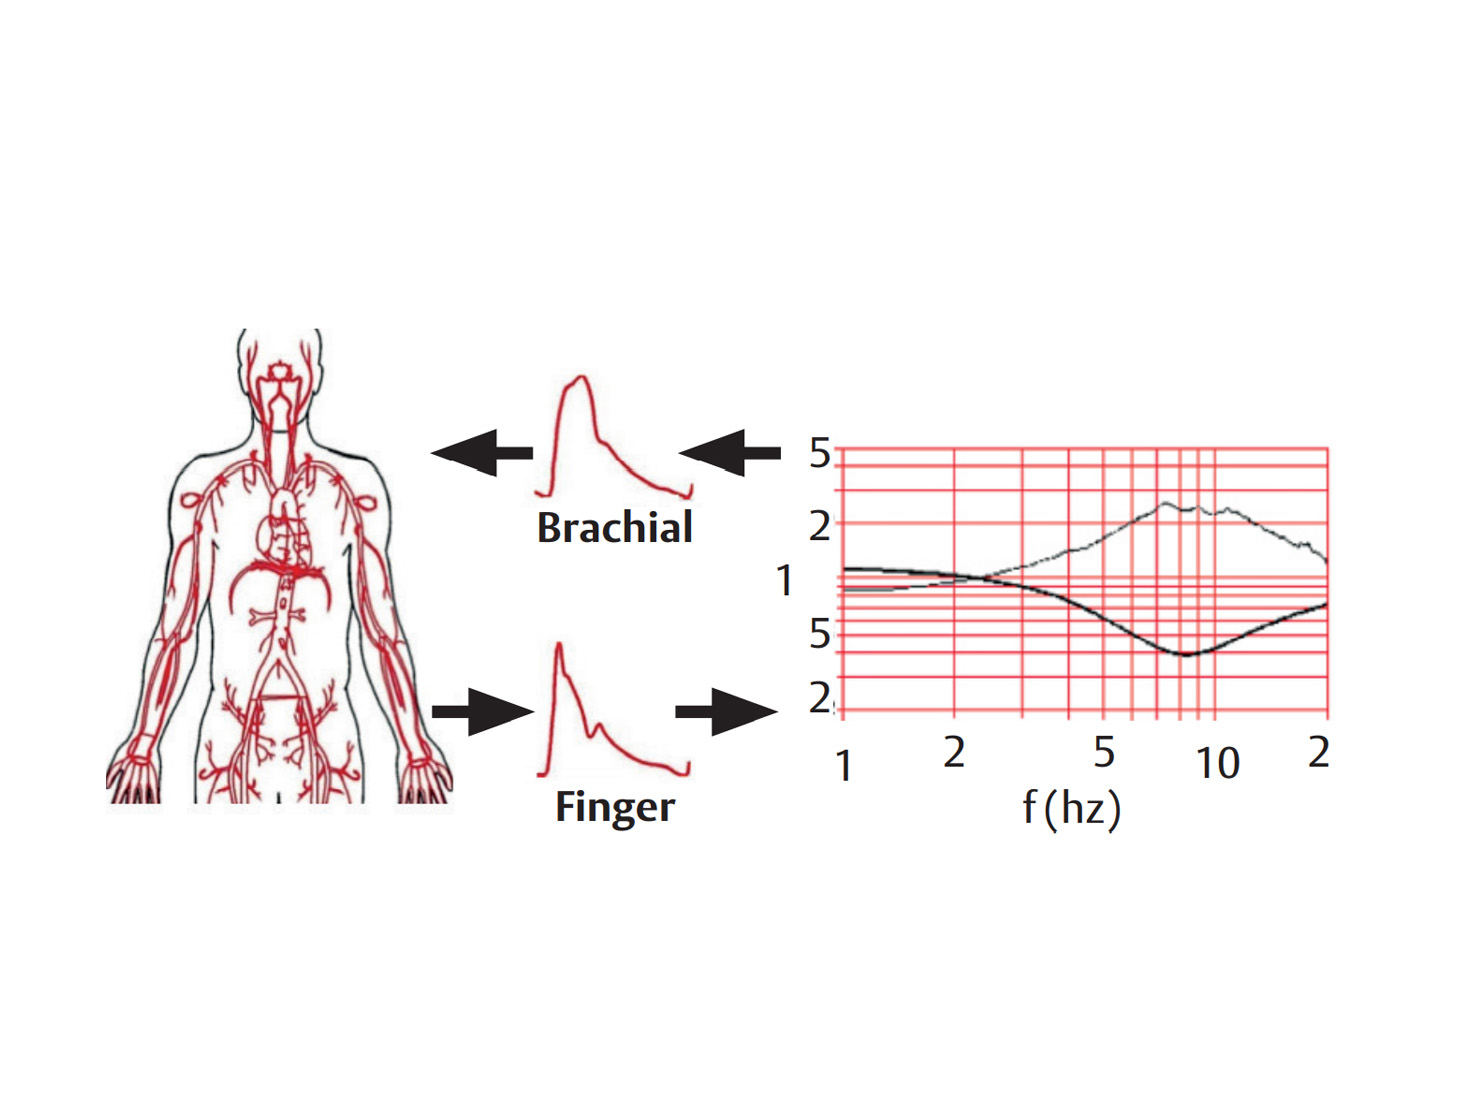 Brachial pressure reconstruction